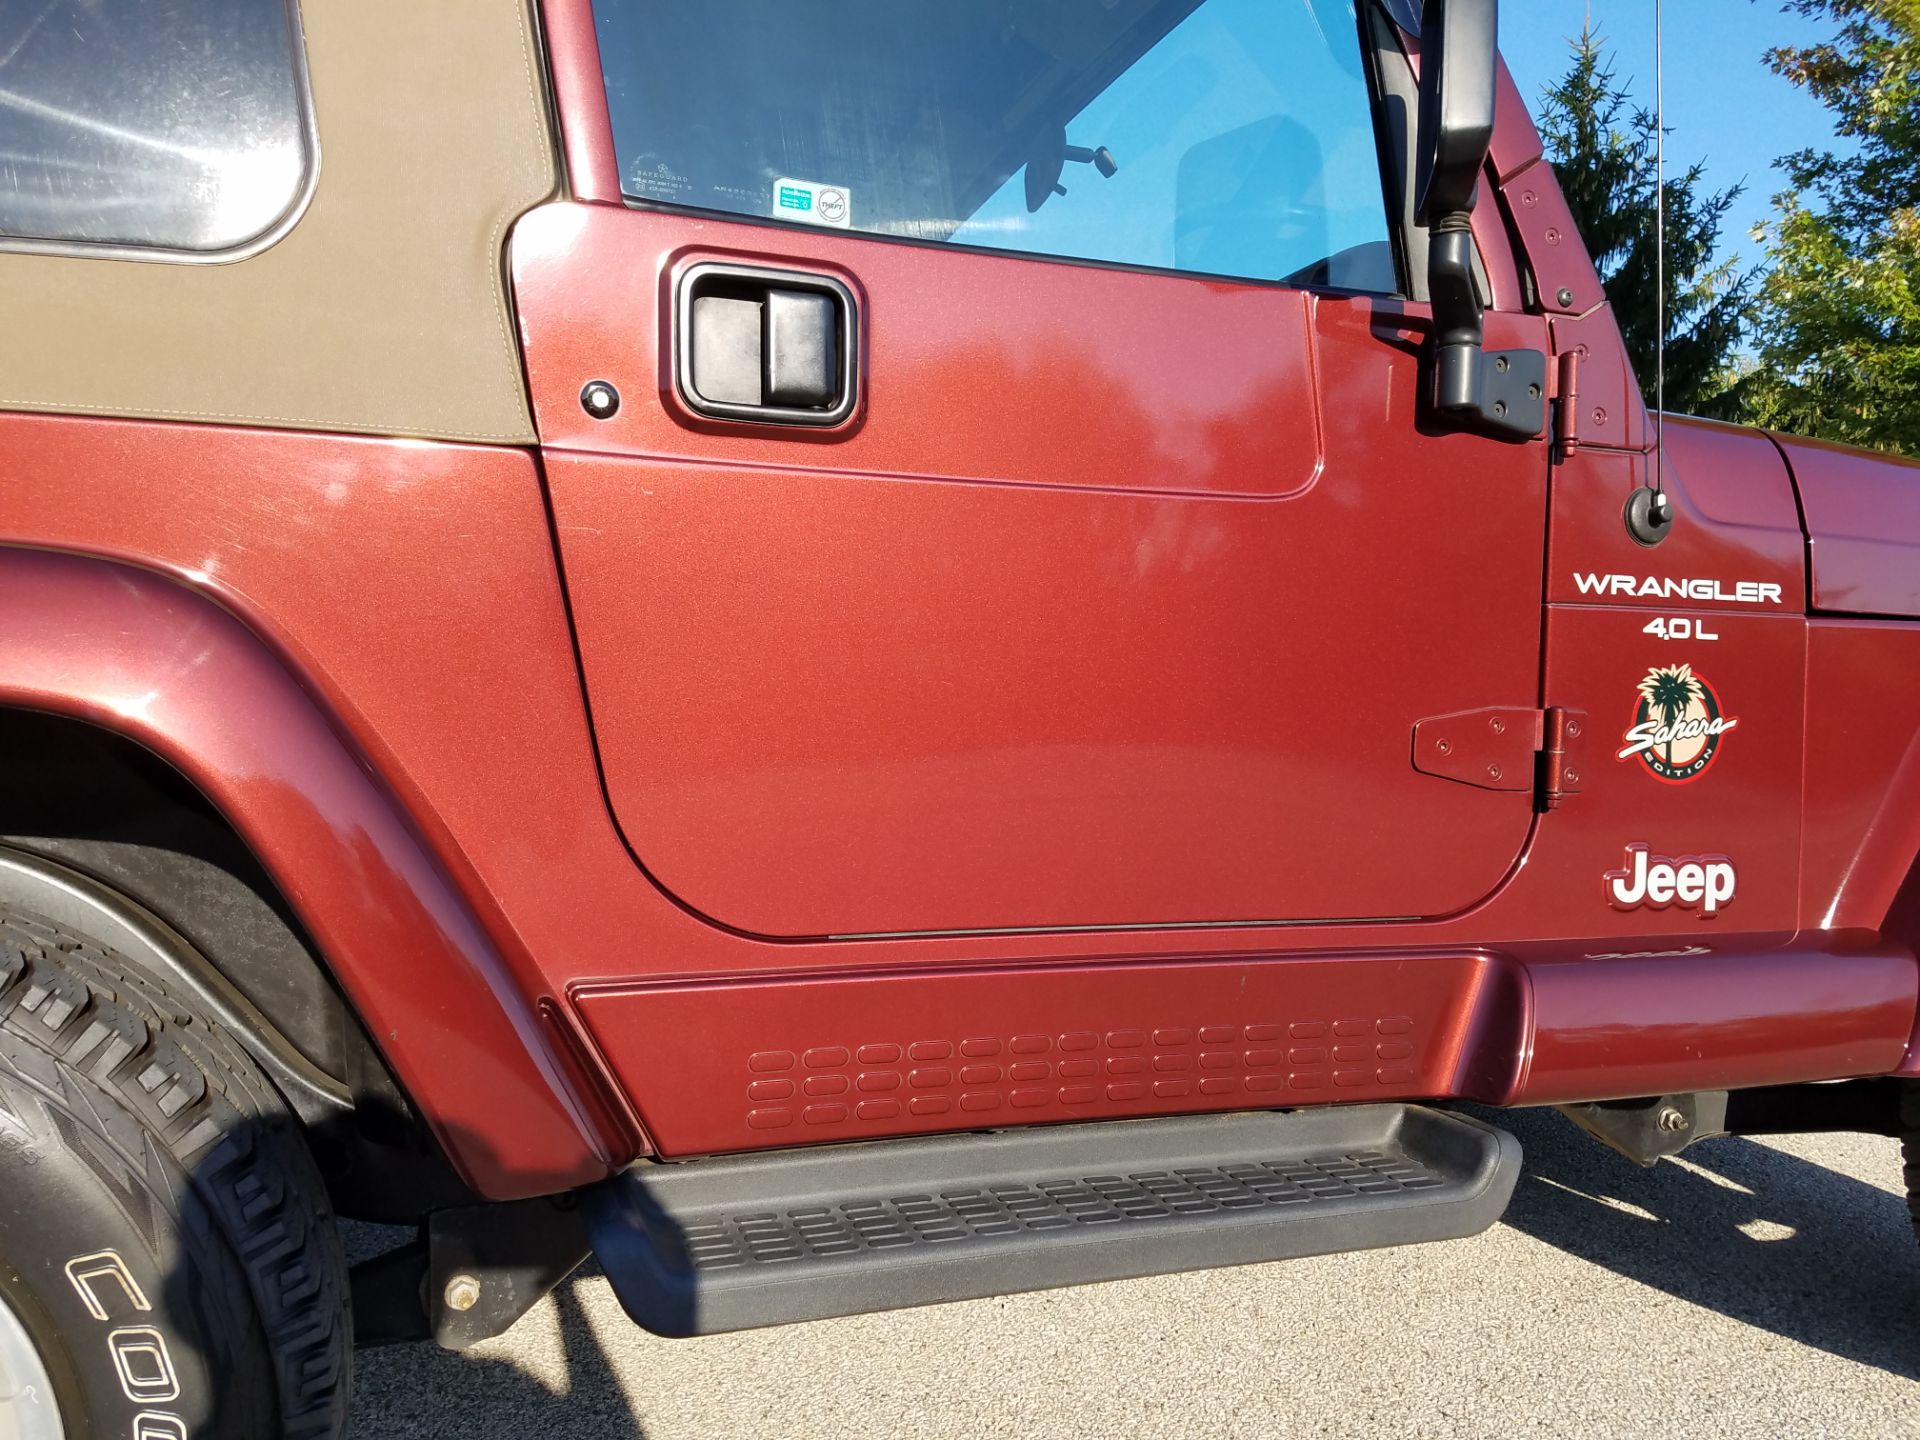 2001 Jeep® Wrangler Sahara in Big Bend, Wisconsin - Photo 13